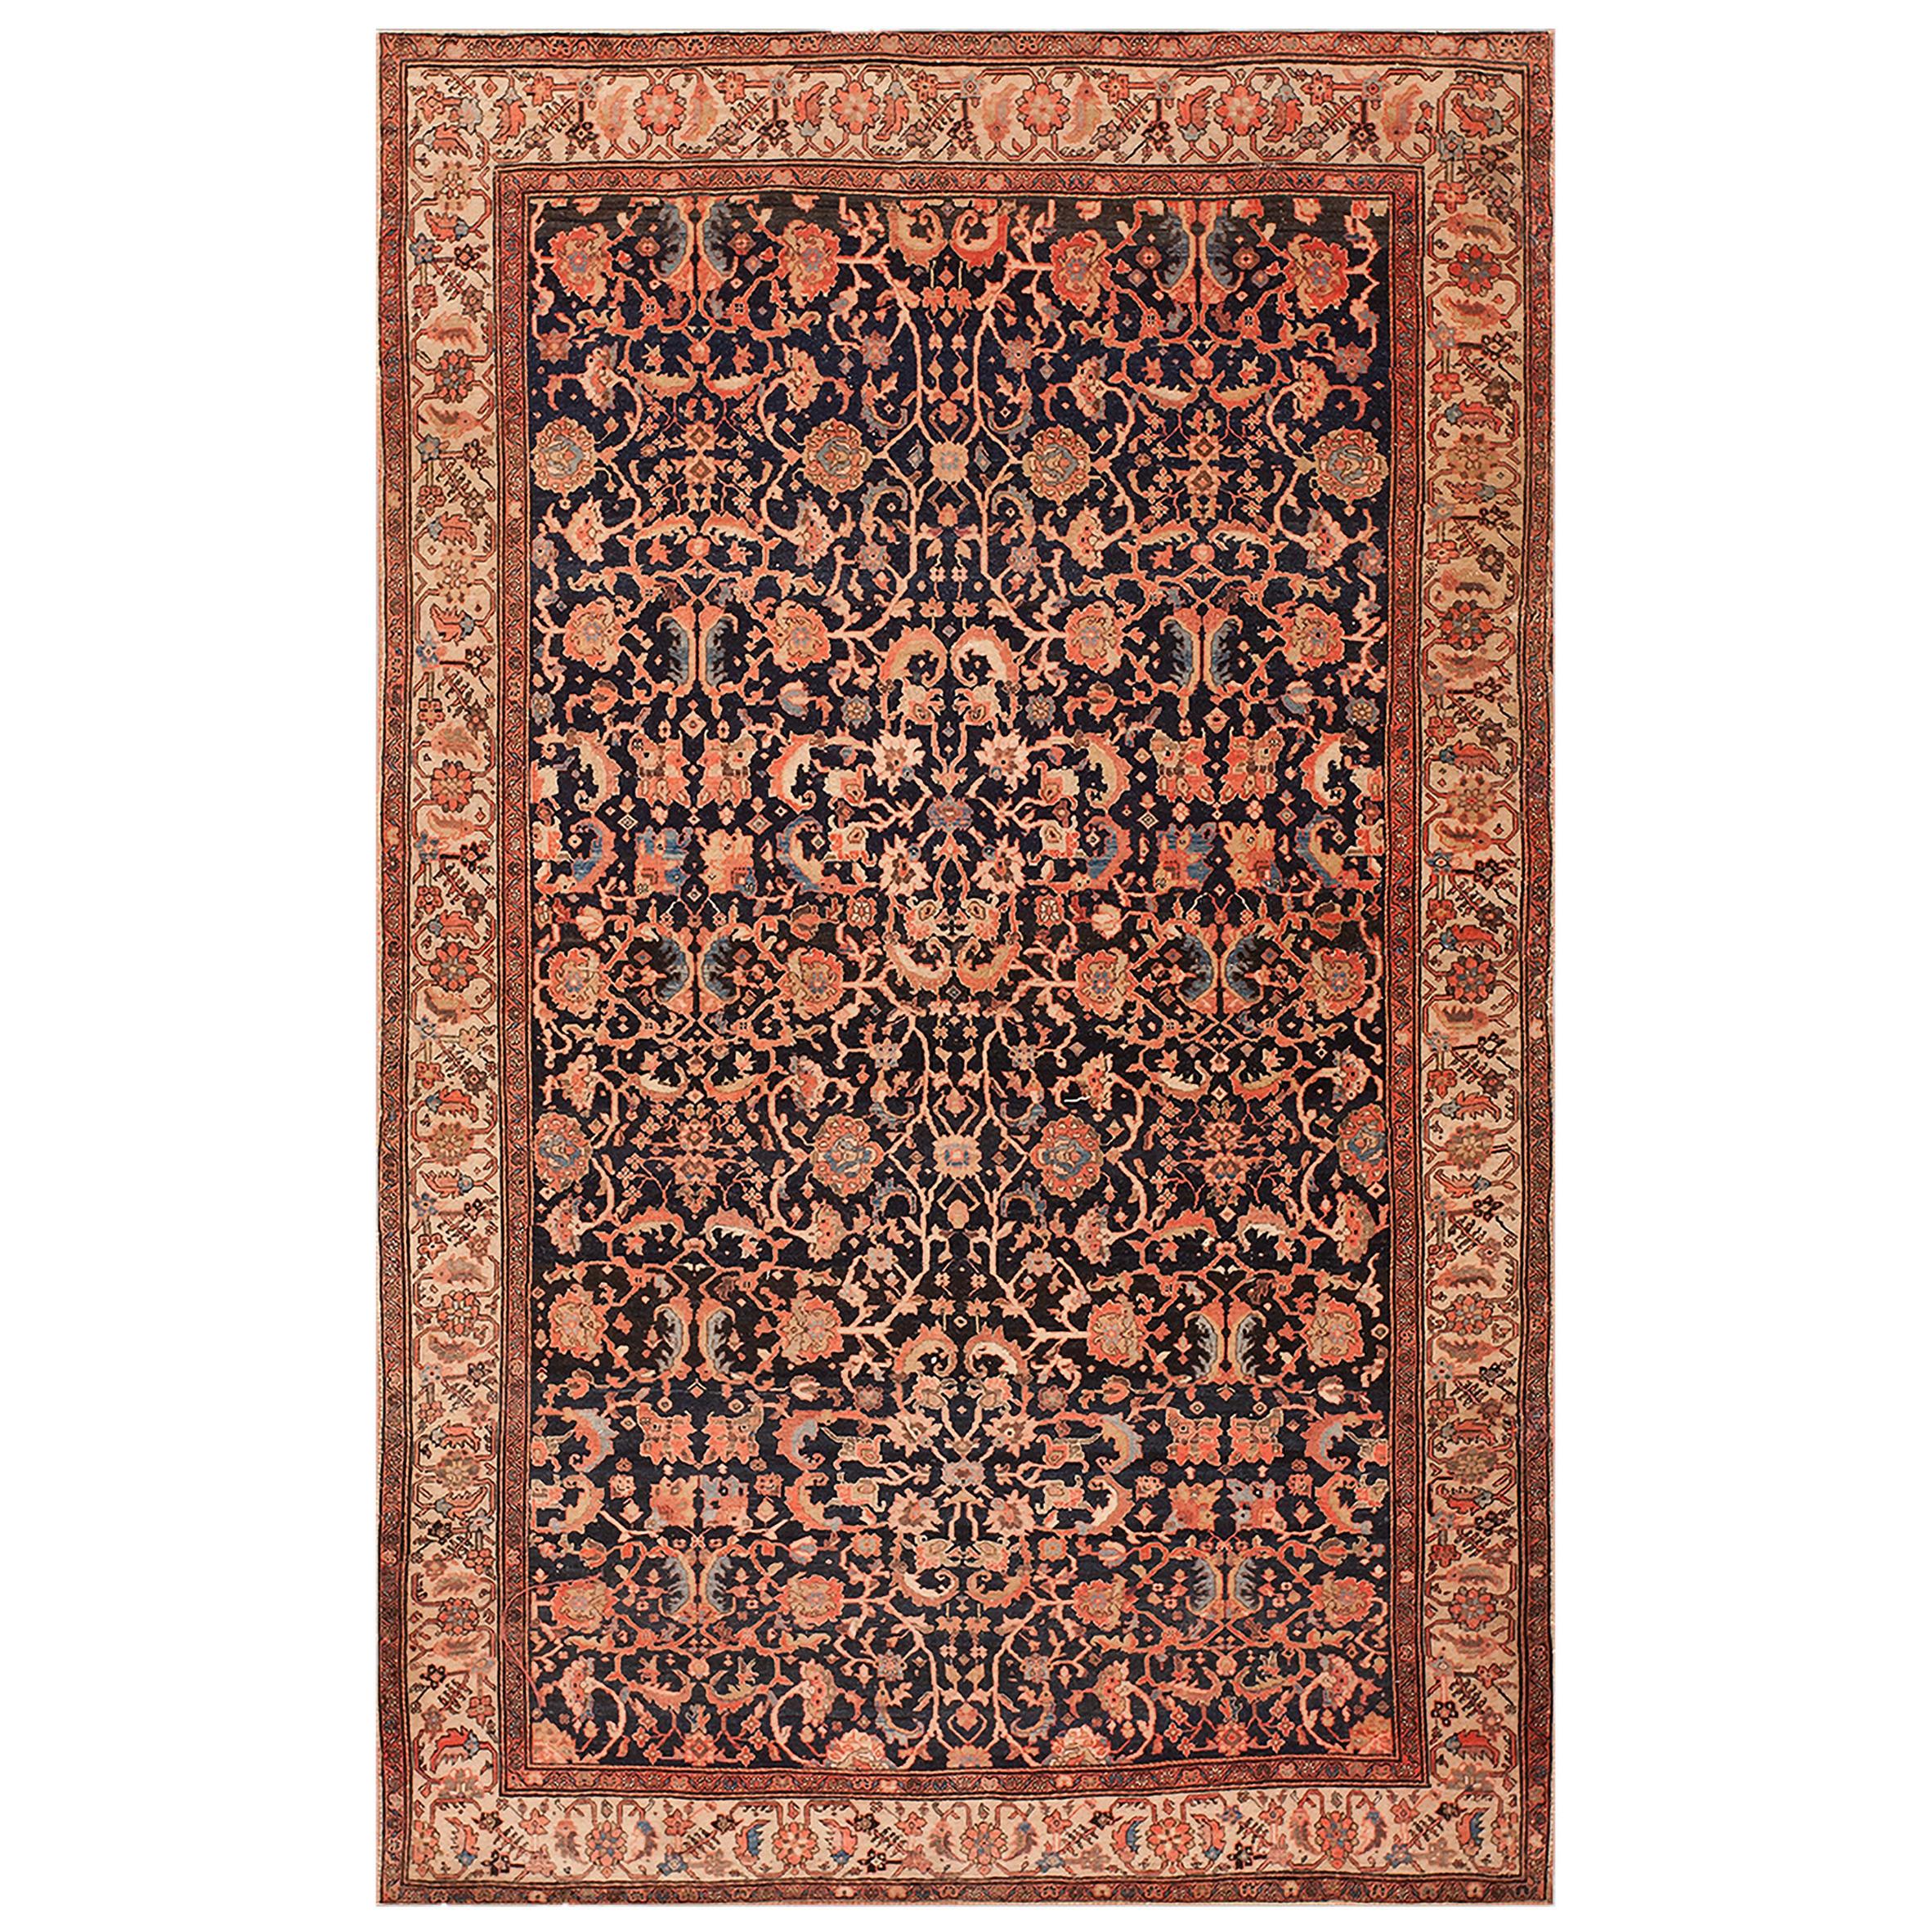 Early 20th Century Persian Sarouk Farahan Carpet ( 4'2" x 6'8" - 127 x 203 ) For Sale